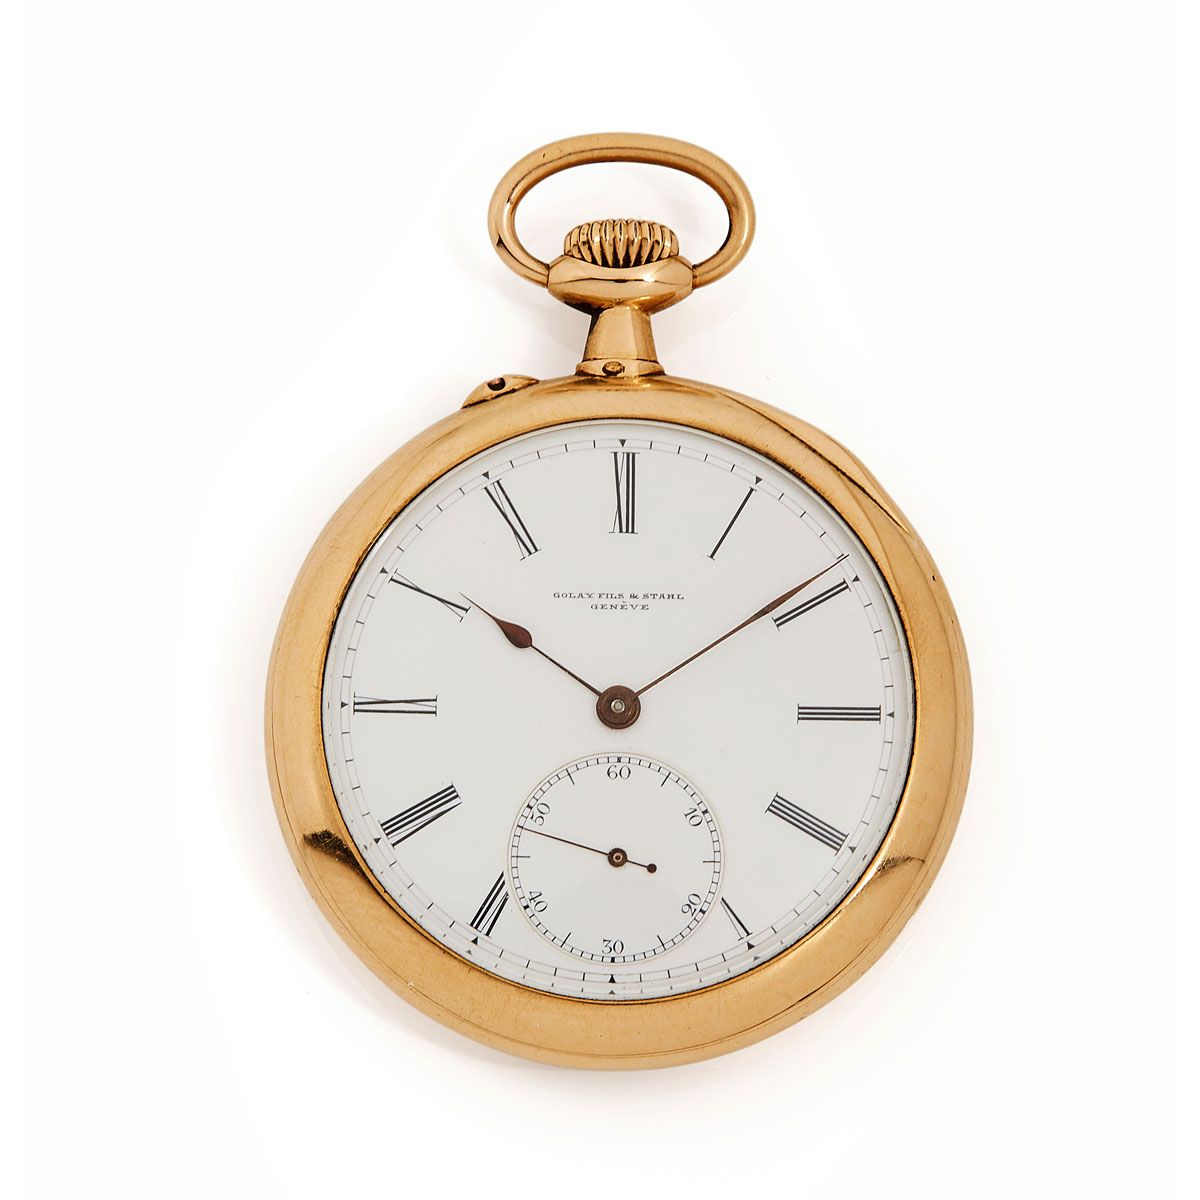 Null Golay Fils & Stahl, n° 30612/100008, vers 1930


Une belle montre de poche &hellip;